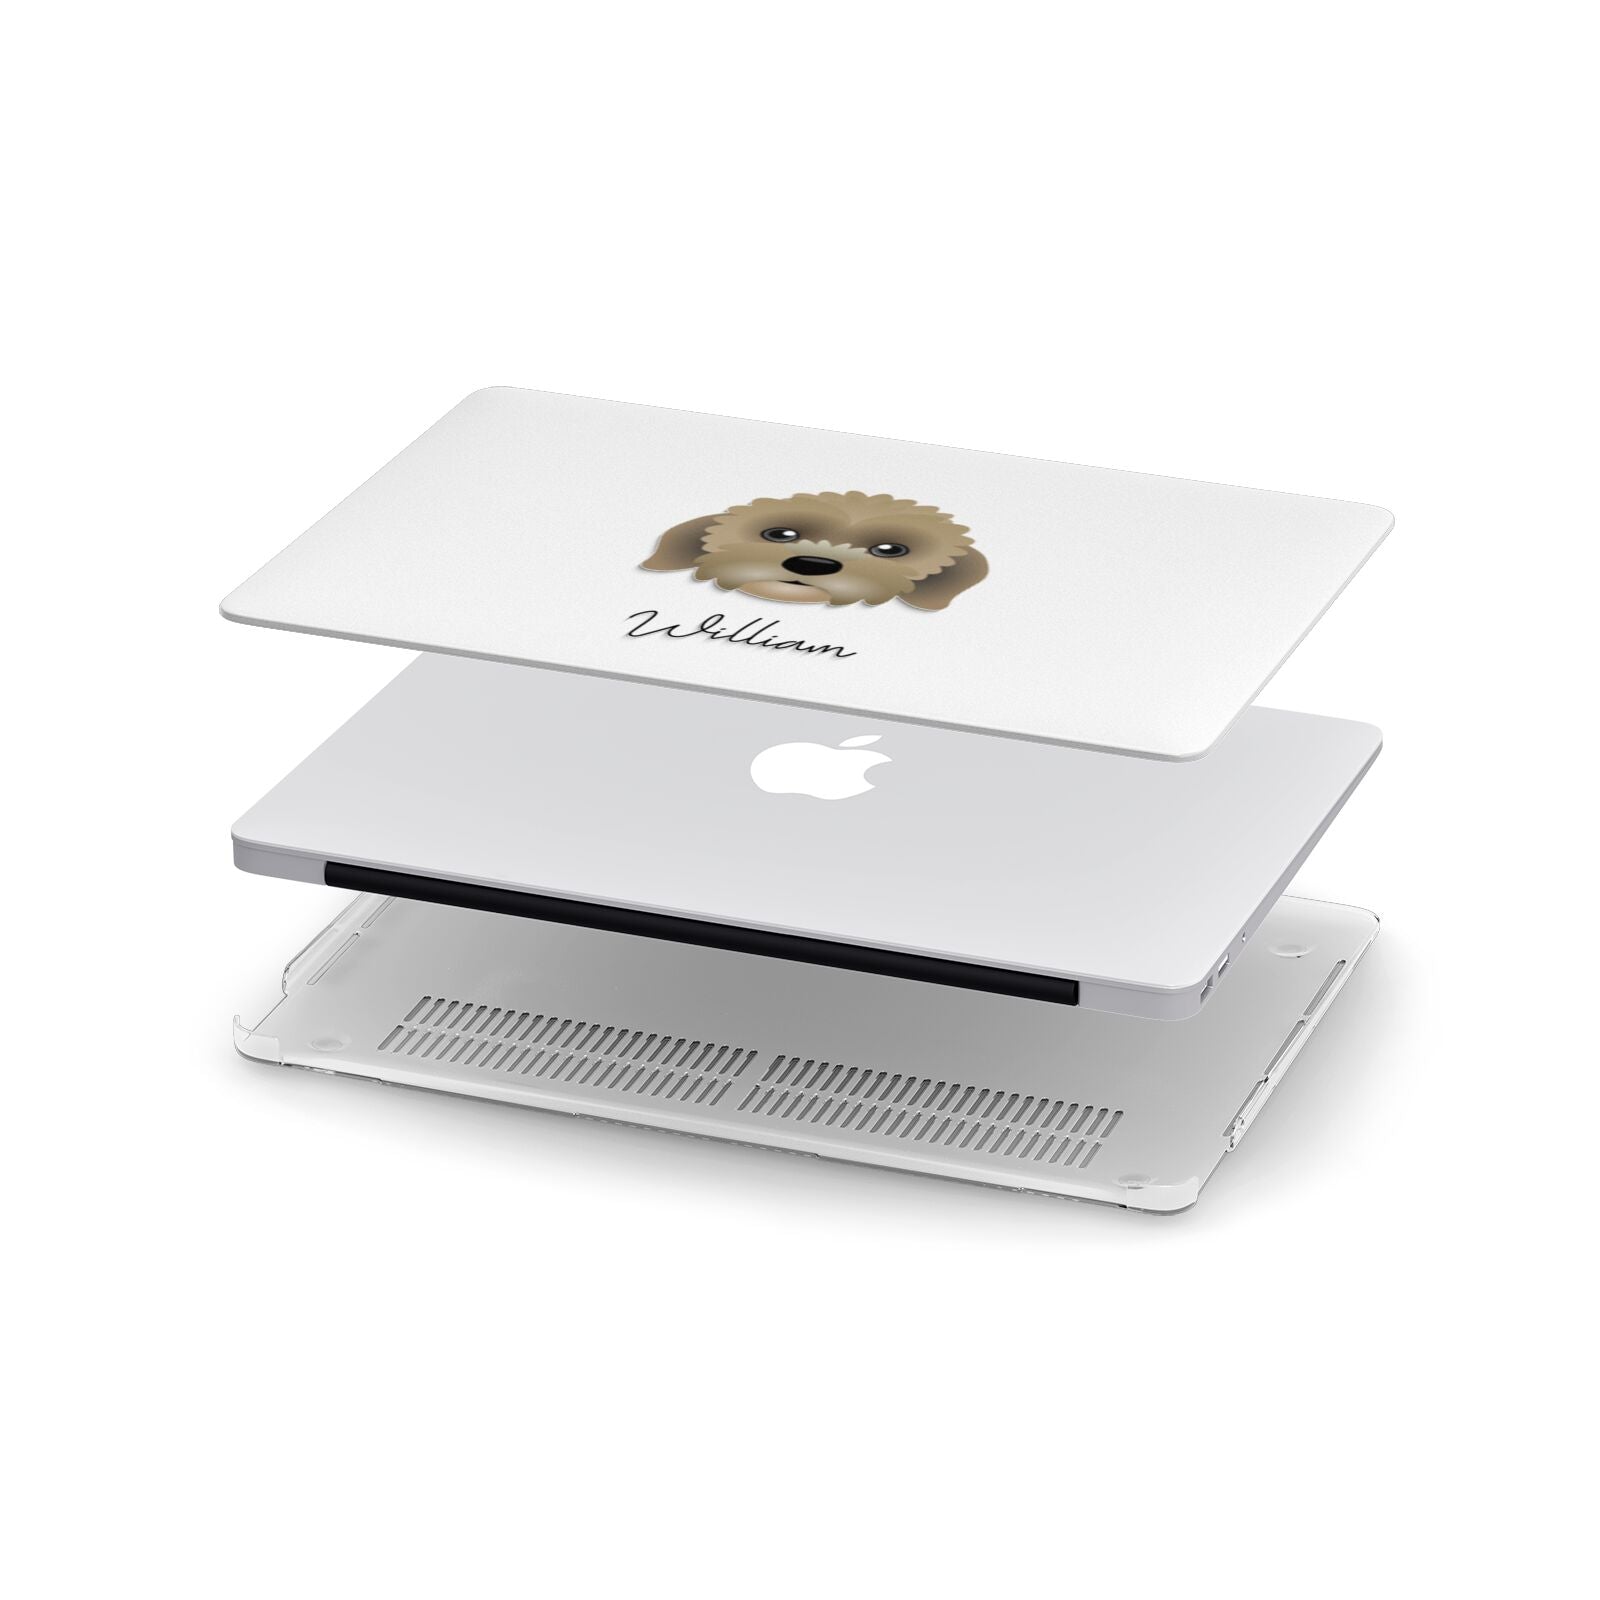 Lachon Personalised Apple MacBook Case in Detail